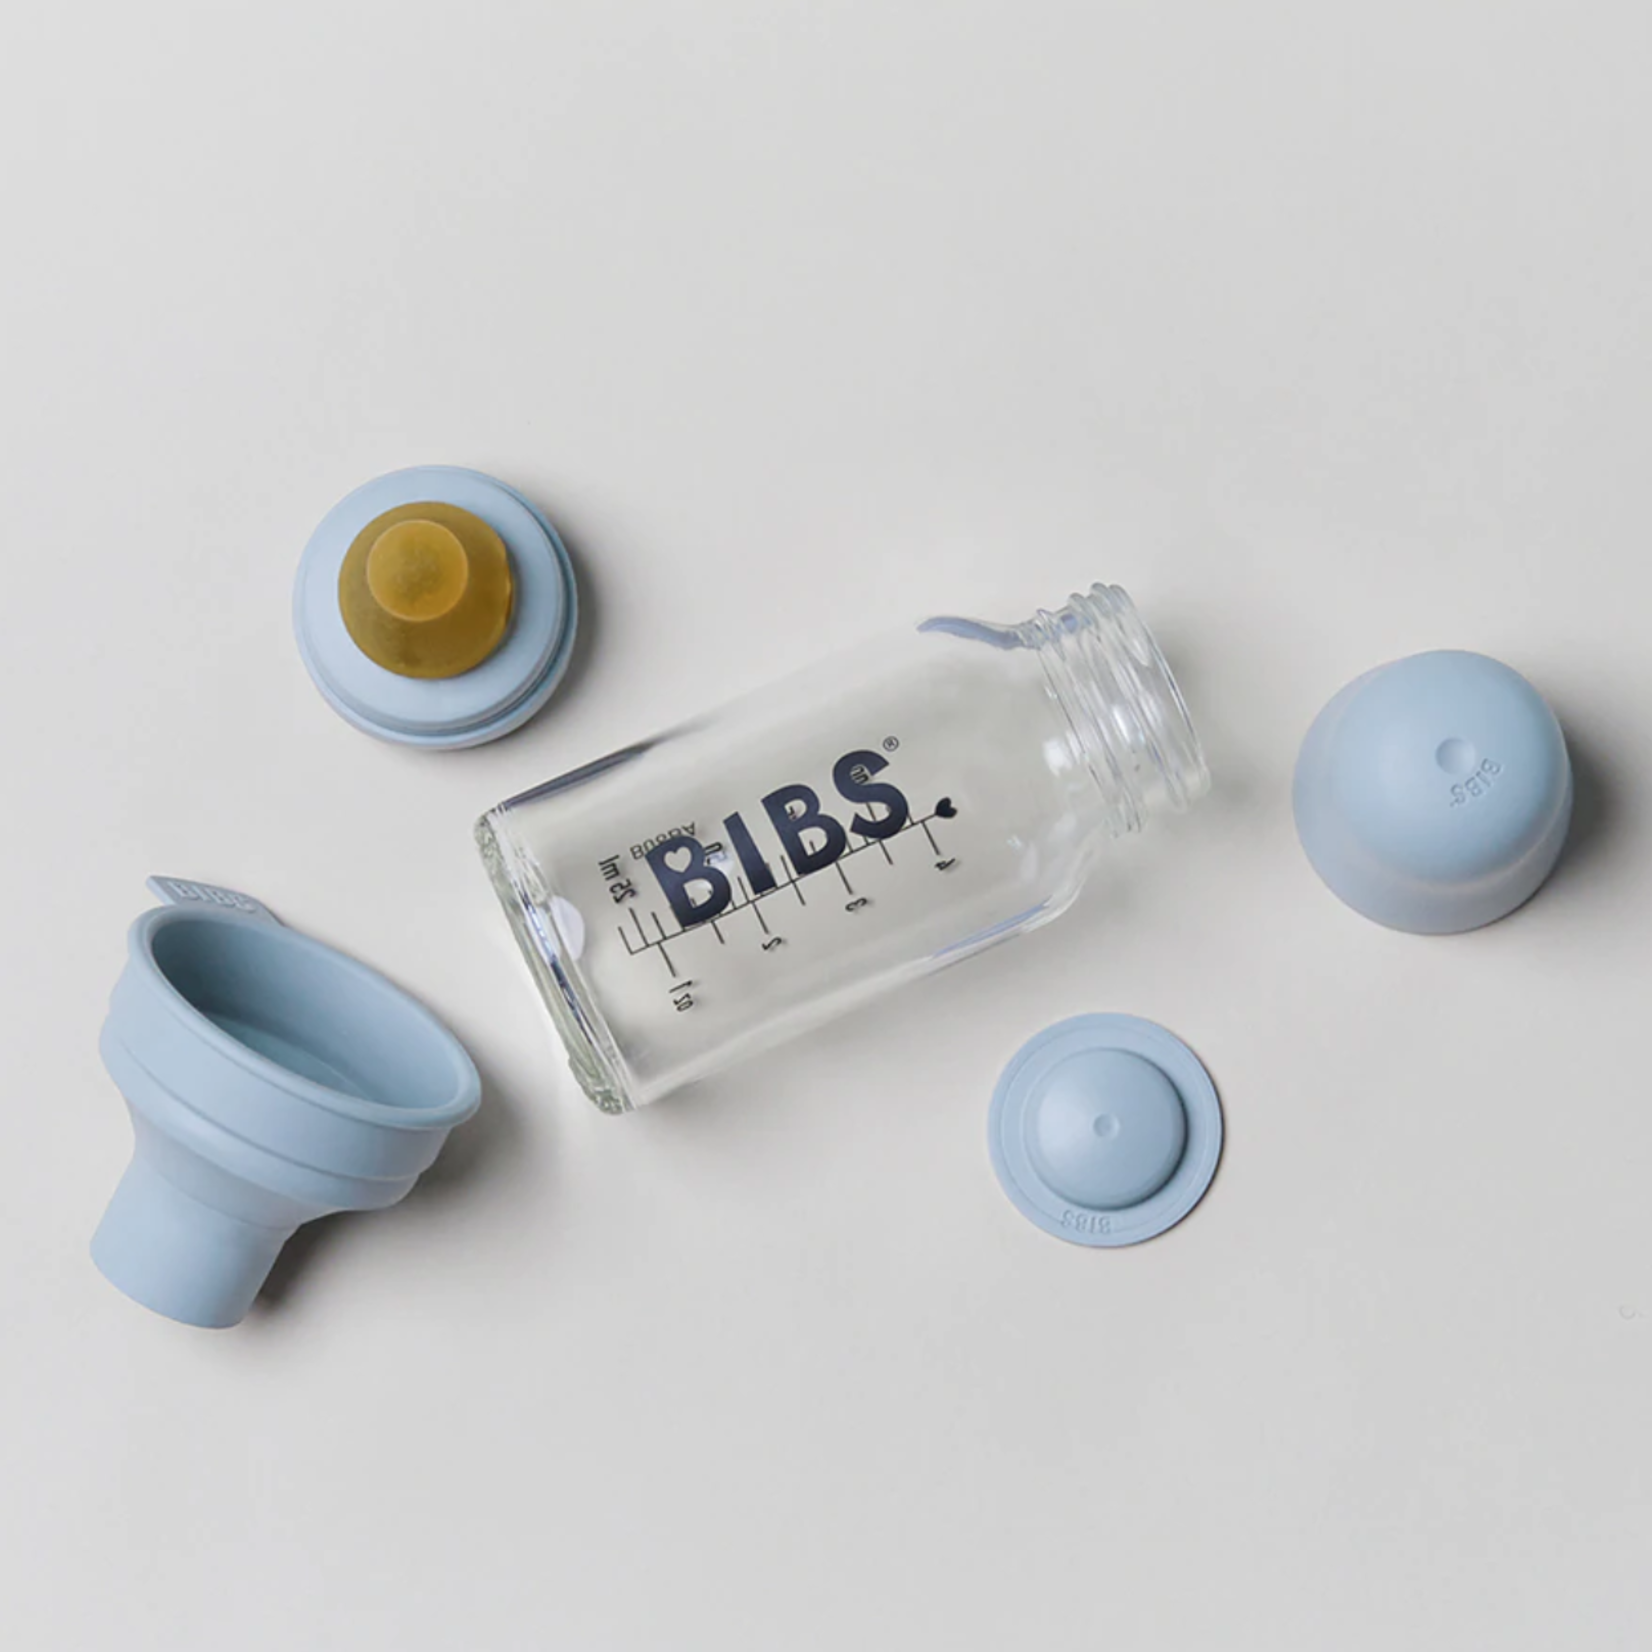 BIBS Glass Bottle | Latex-Blush 110ml